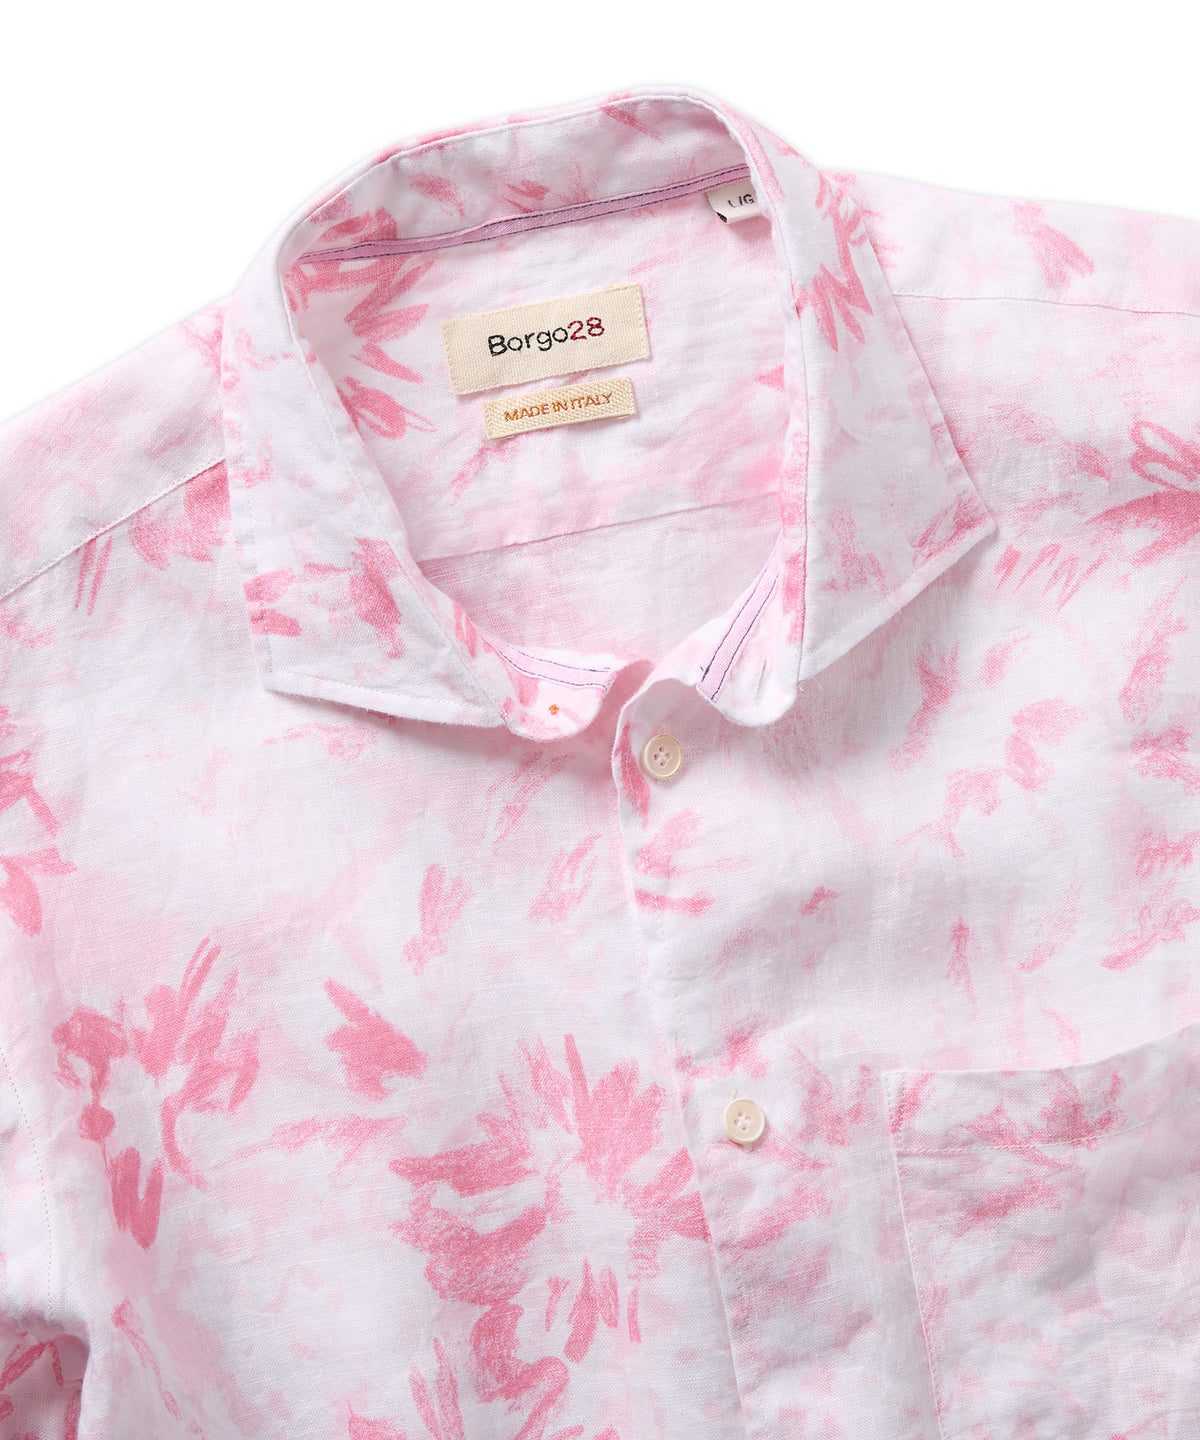 Merlino Flower Long Sleeve Linen Sport Shirt